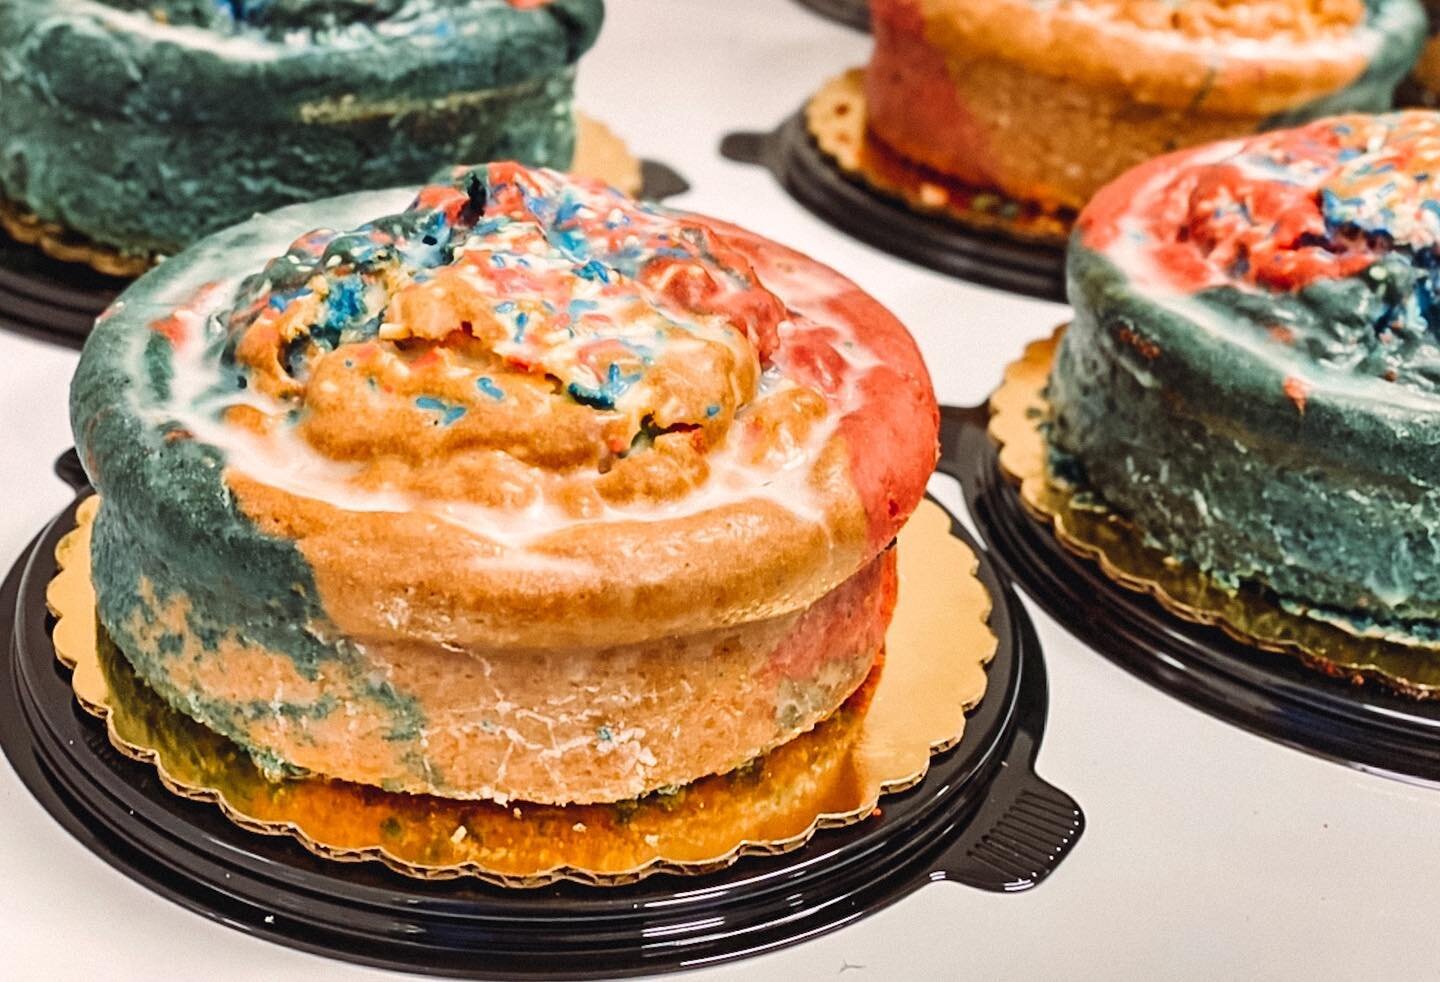 Red, White &amp; Blue Dream Cakes 🇺🇸 on sale for $9.99/ea #mymarket 

#livotis #livotisoldworldmarket #dreamcakes #fourthofjuly #julyfourth #livotisfreehold #livotisofmiddletown #livotisofaberdeen #livotisofmarlboro